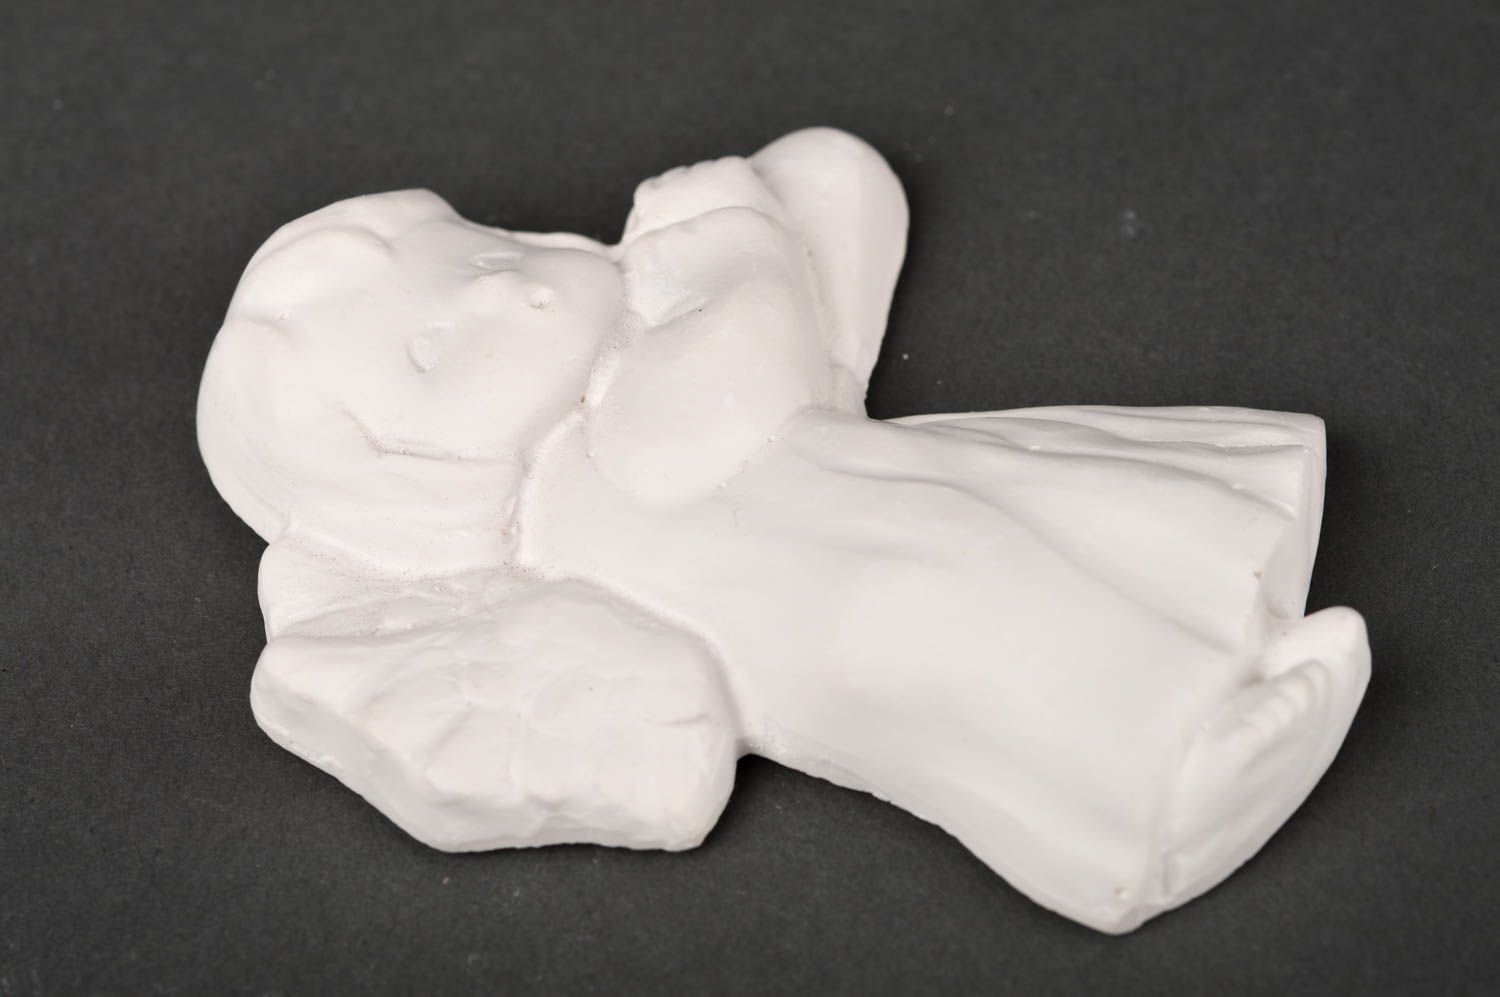 Unusual handmade plaster blank plaster figurine diy home decor gift ideas photo 2